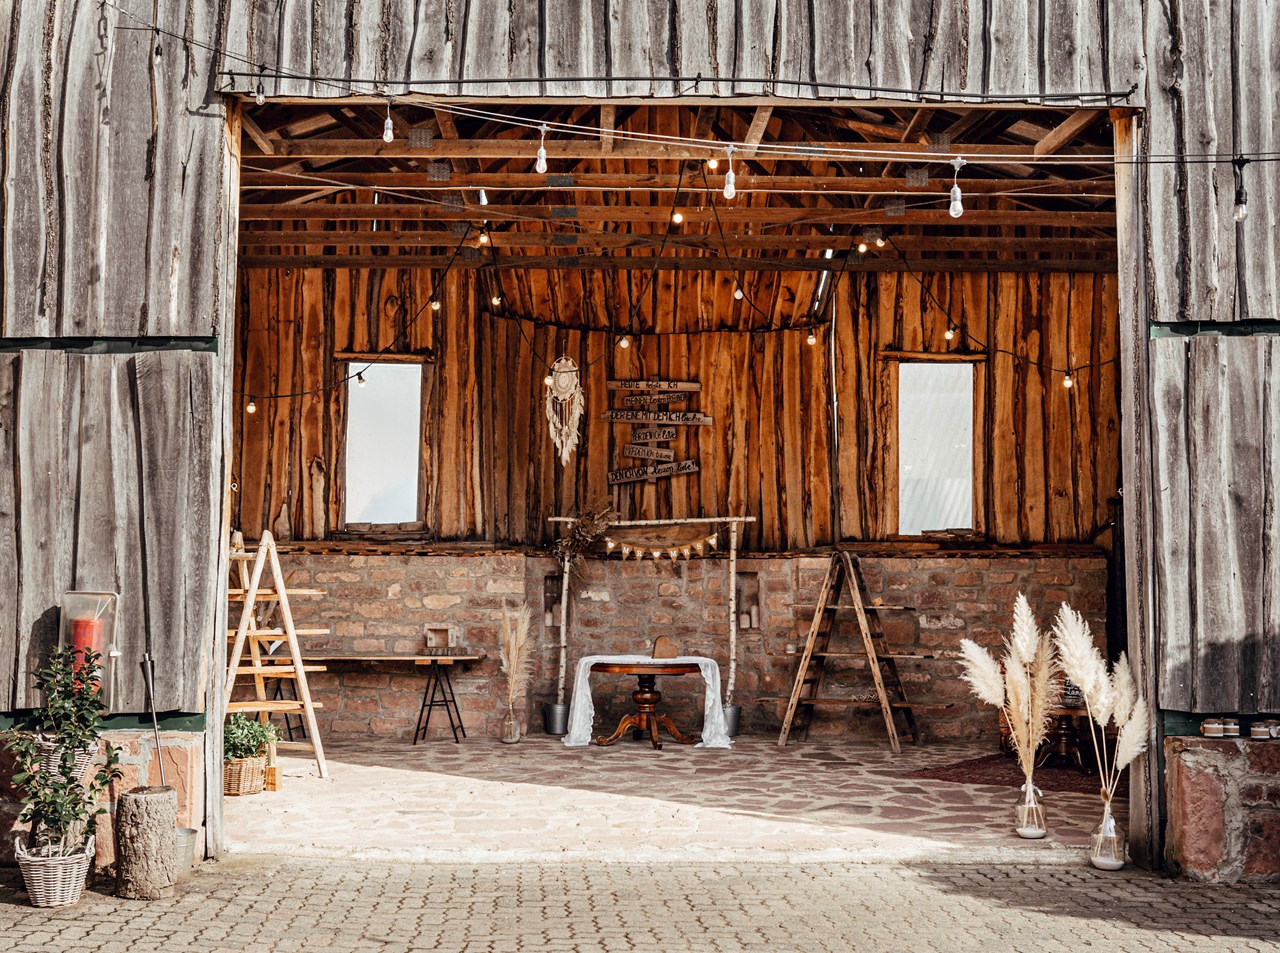 Marienhof Fecher Information about the banquet halls Open barn